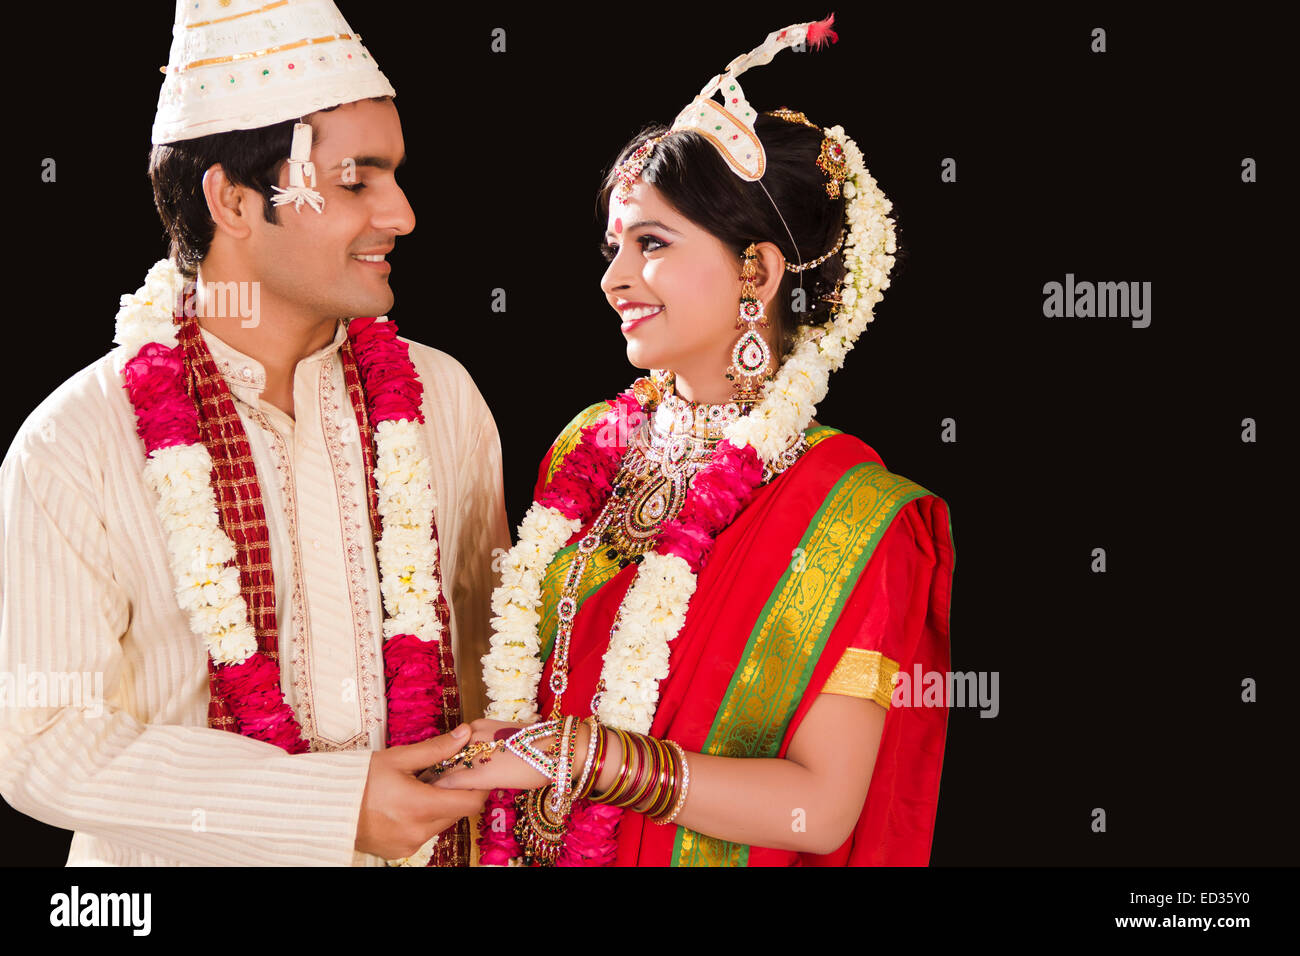 Bengal #bridal #bride #bengali #wedding #India | Indian wedding bride,  Indian wedding photography poses, Indian wedding couple photography